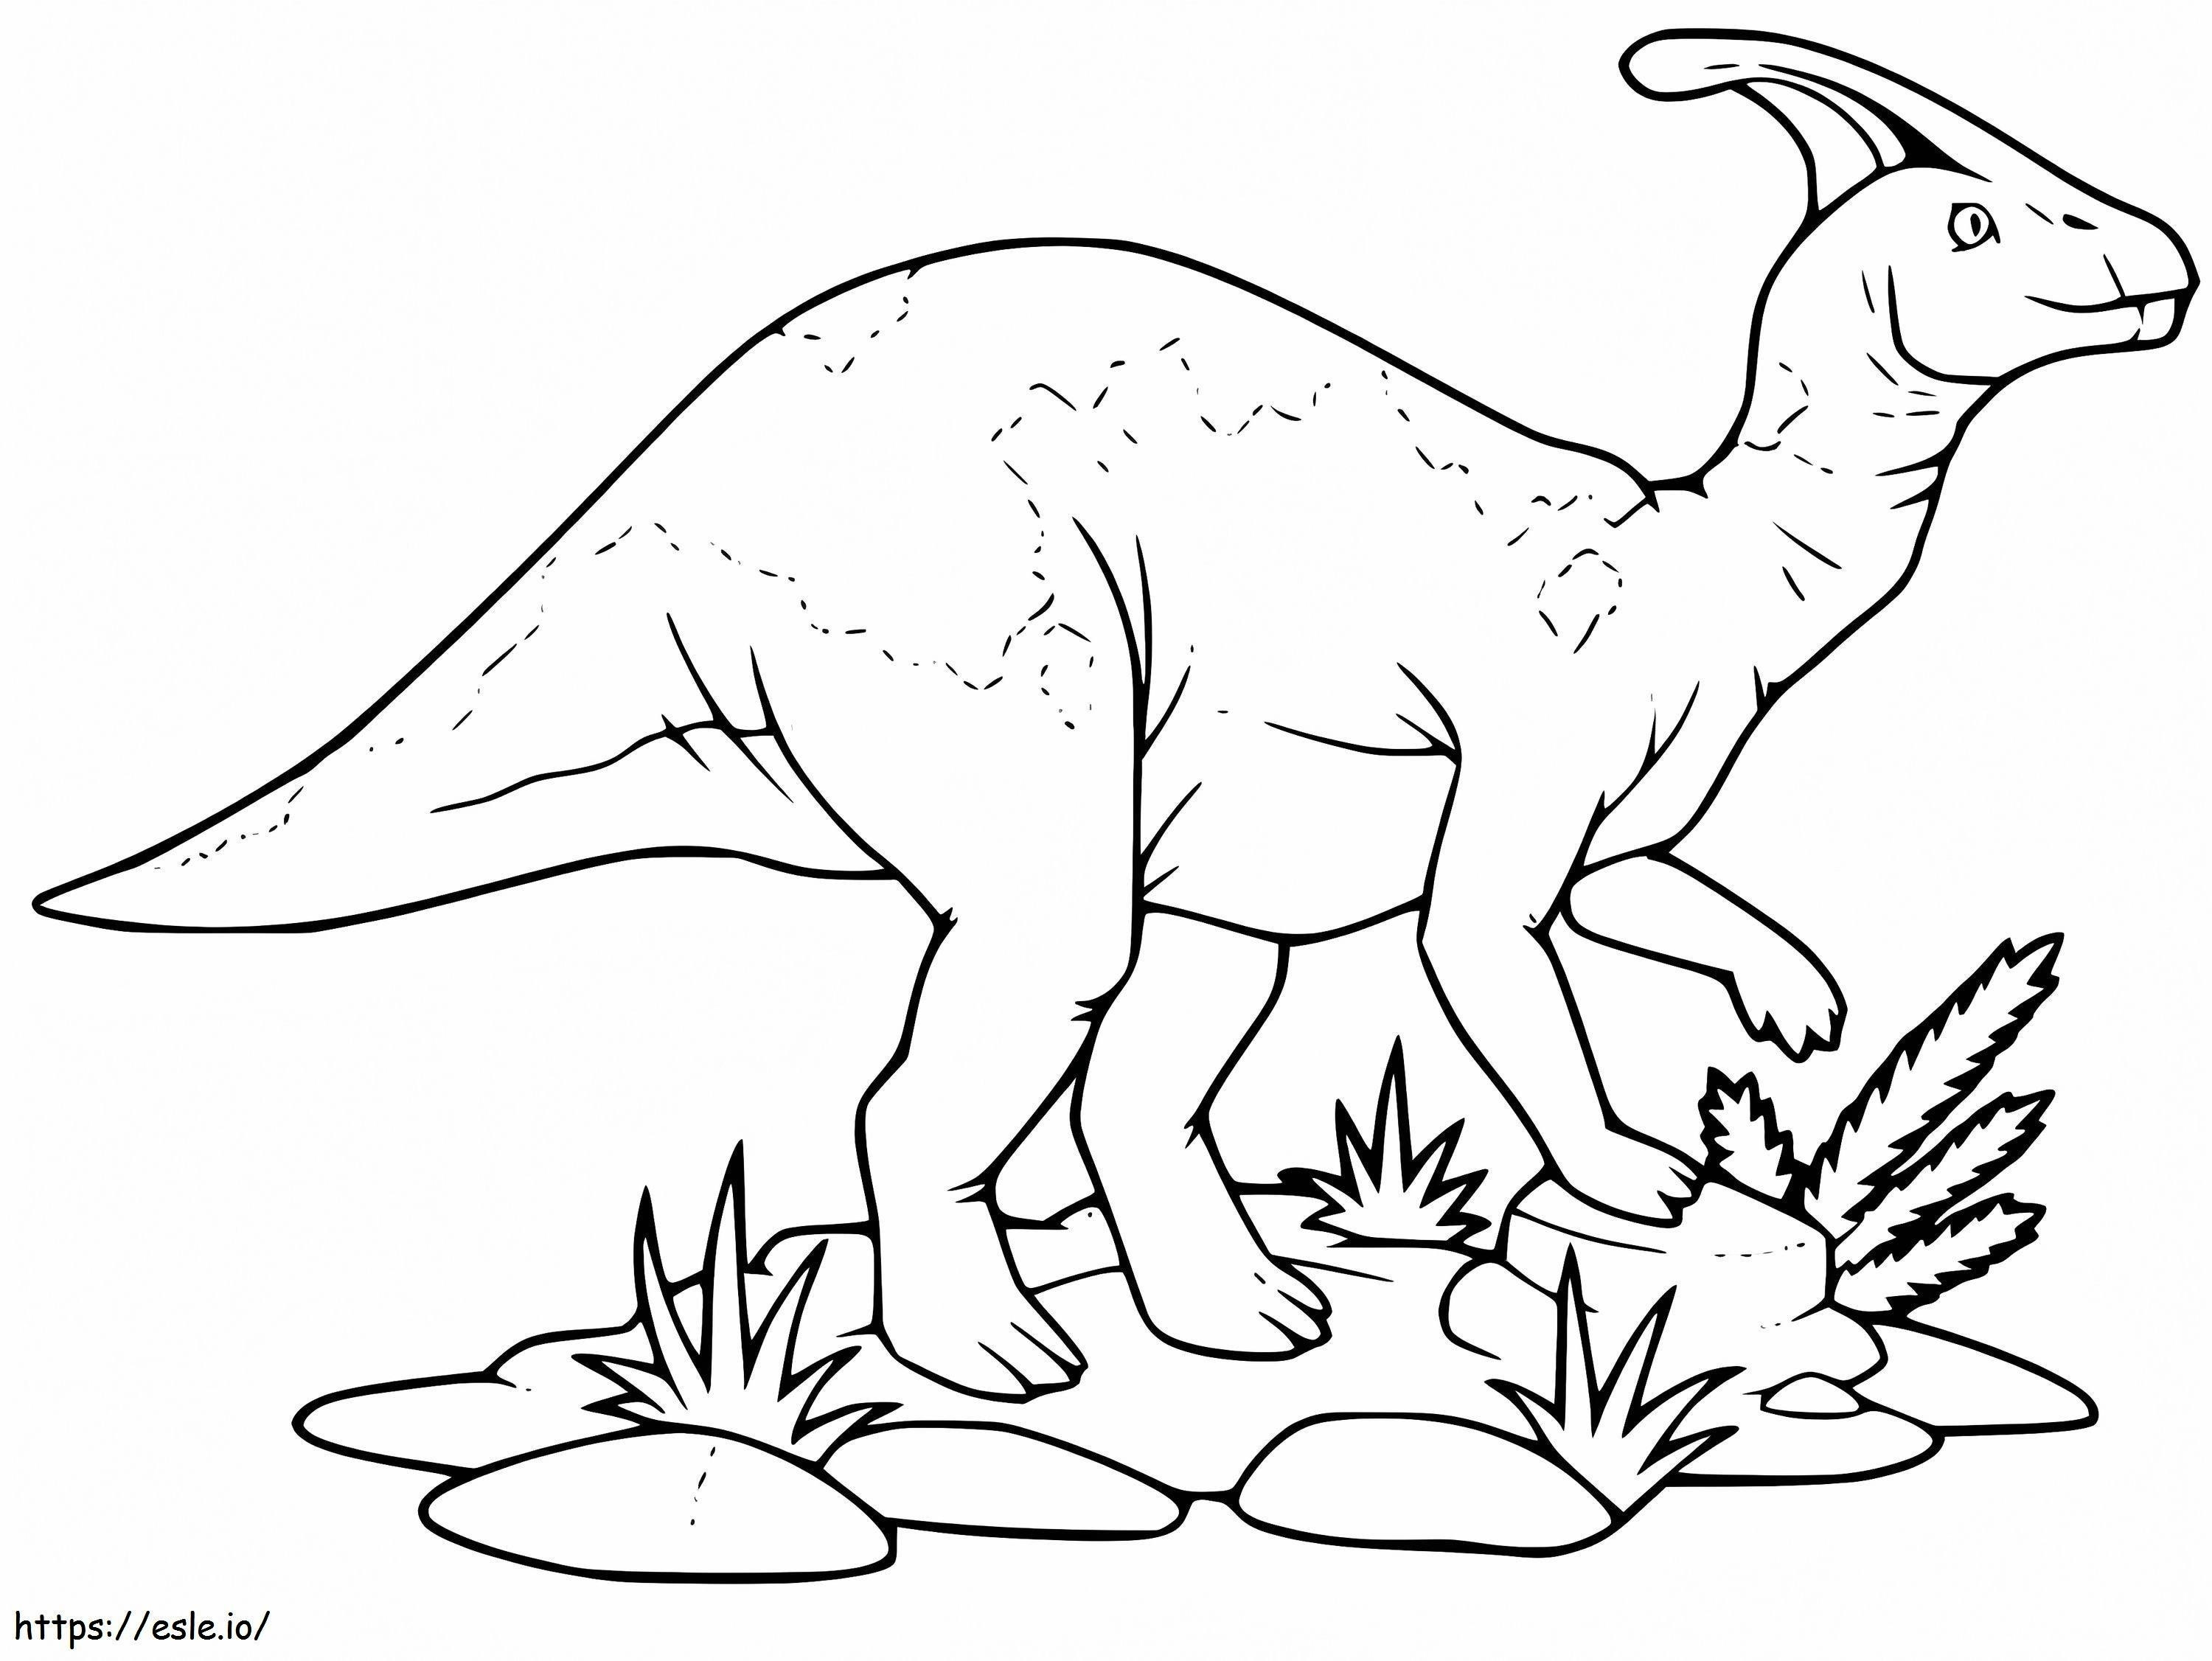 Parasaurolophus 8 coloring page